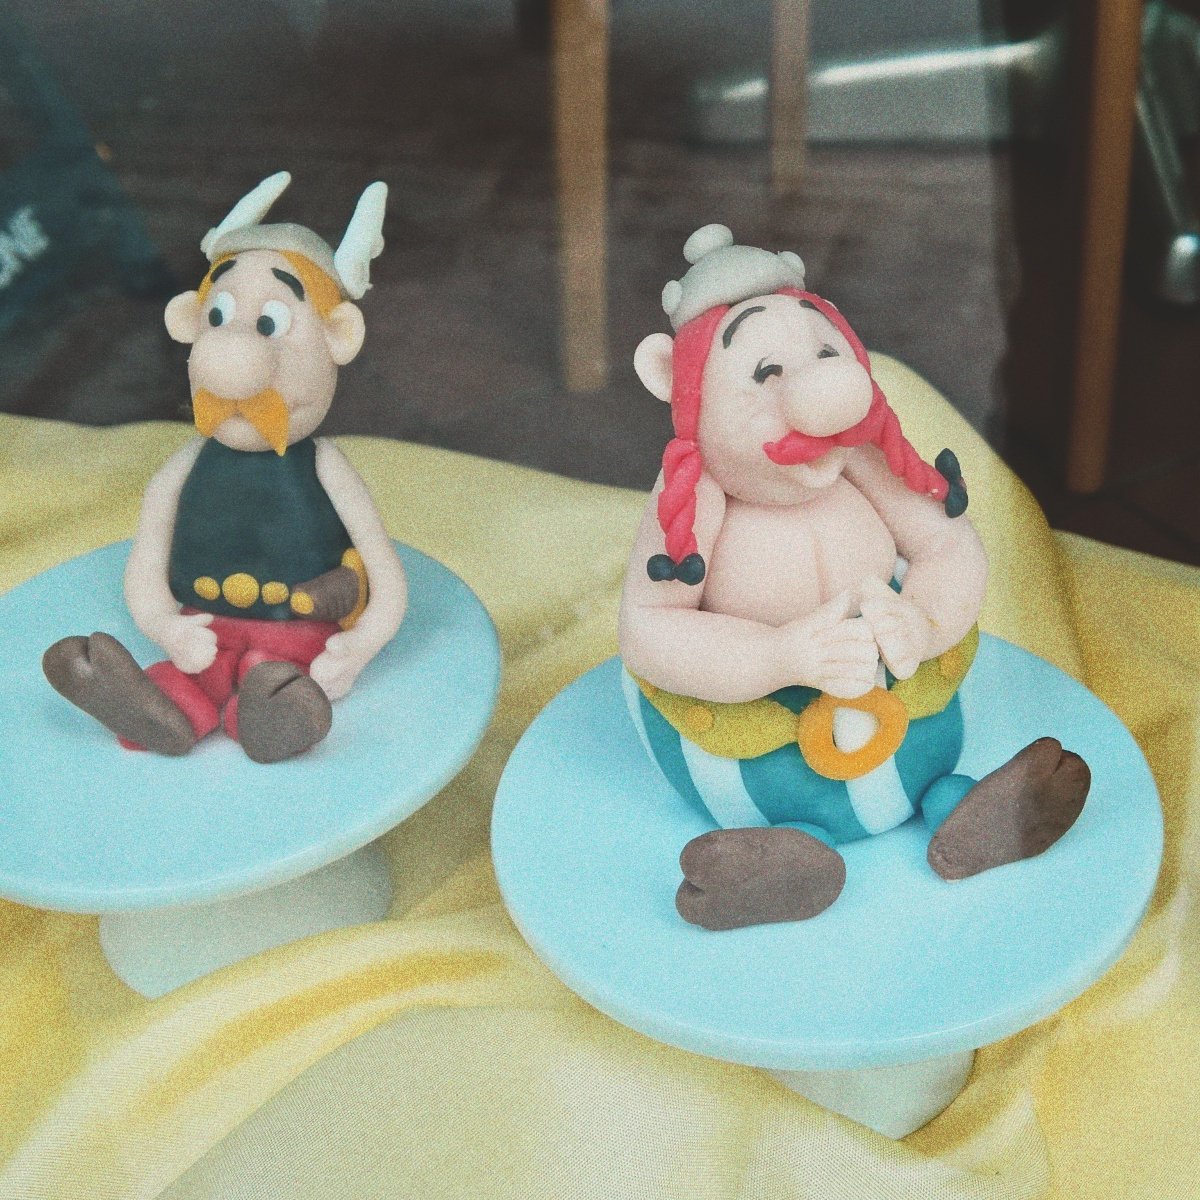 Asterix & obelix cake | Cartoon cake, Cake, Cupcake cakes